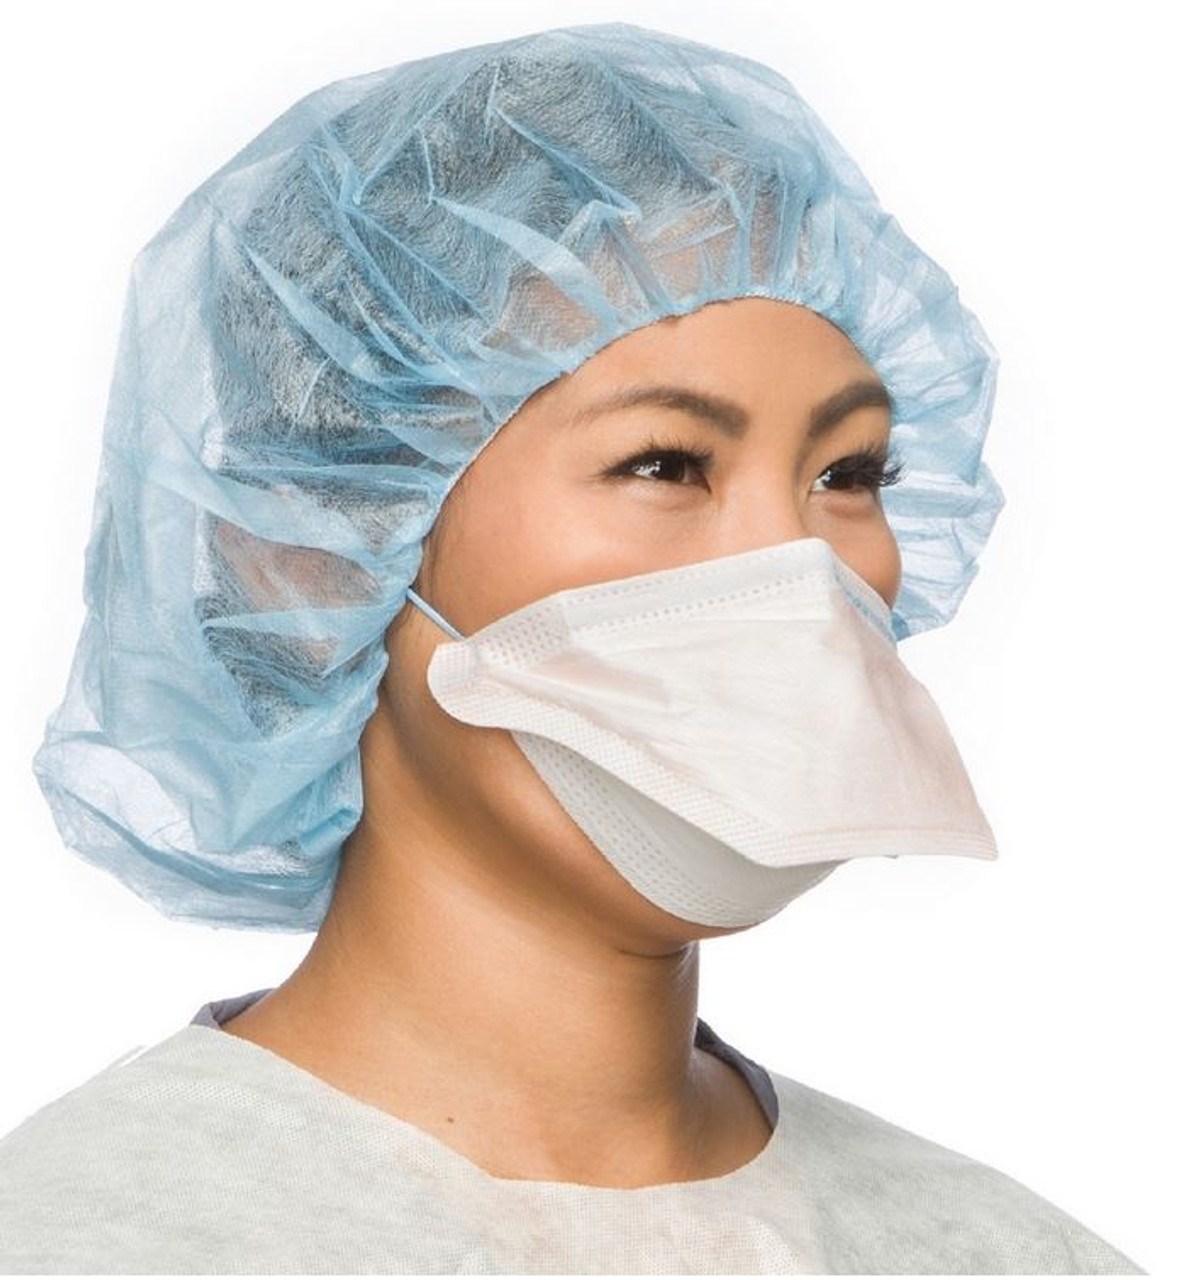 Halyard FLUIDSHIELD N95 Surgical Mask, Particulate Filter Respirator ...